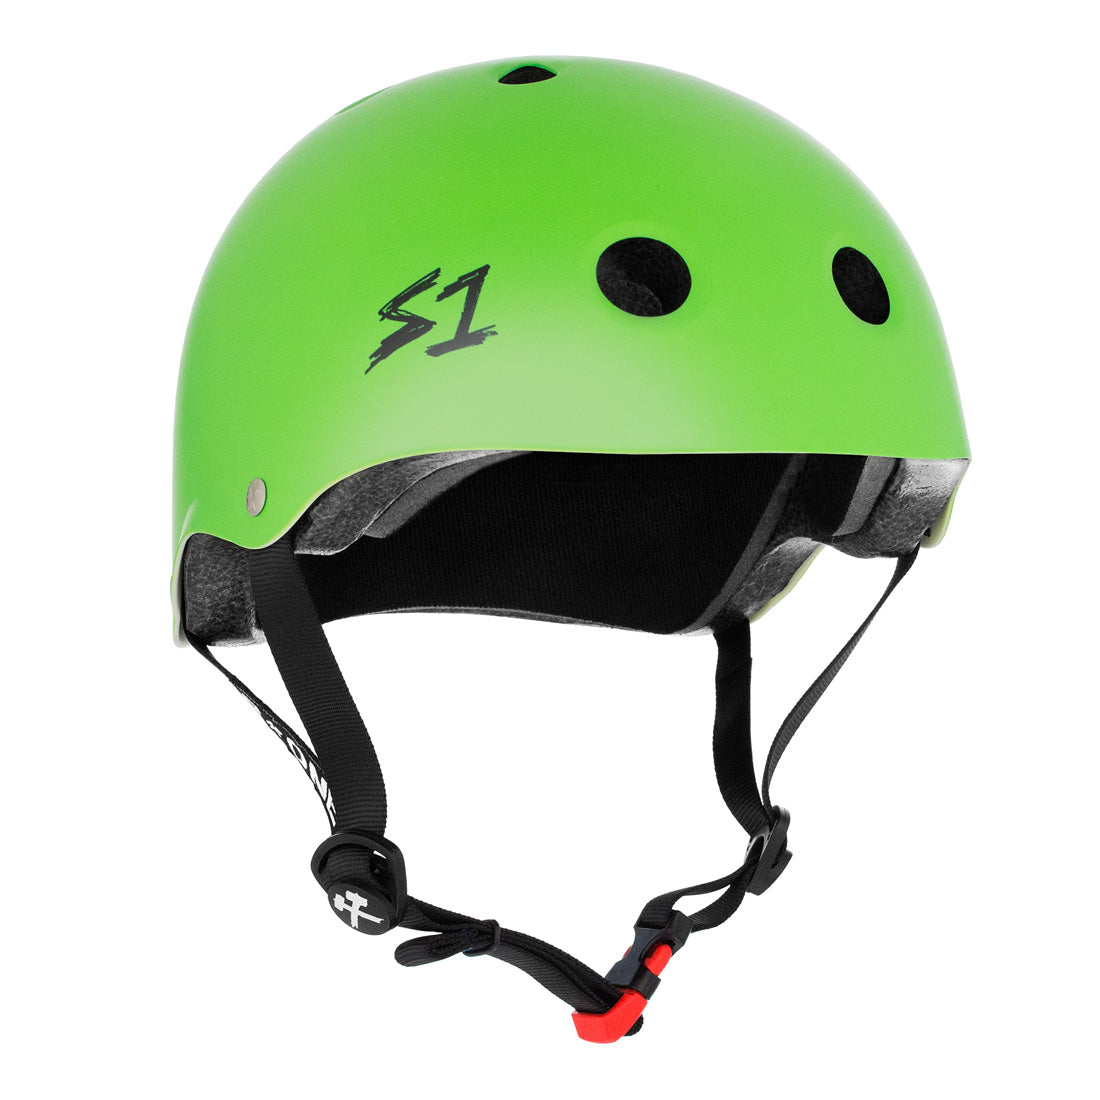 S-One Mini Lifer Helmet - Bright Green Matte Helmets